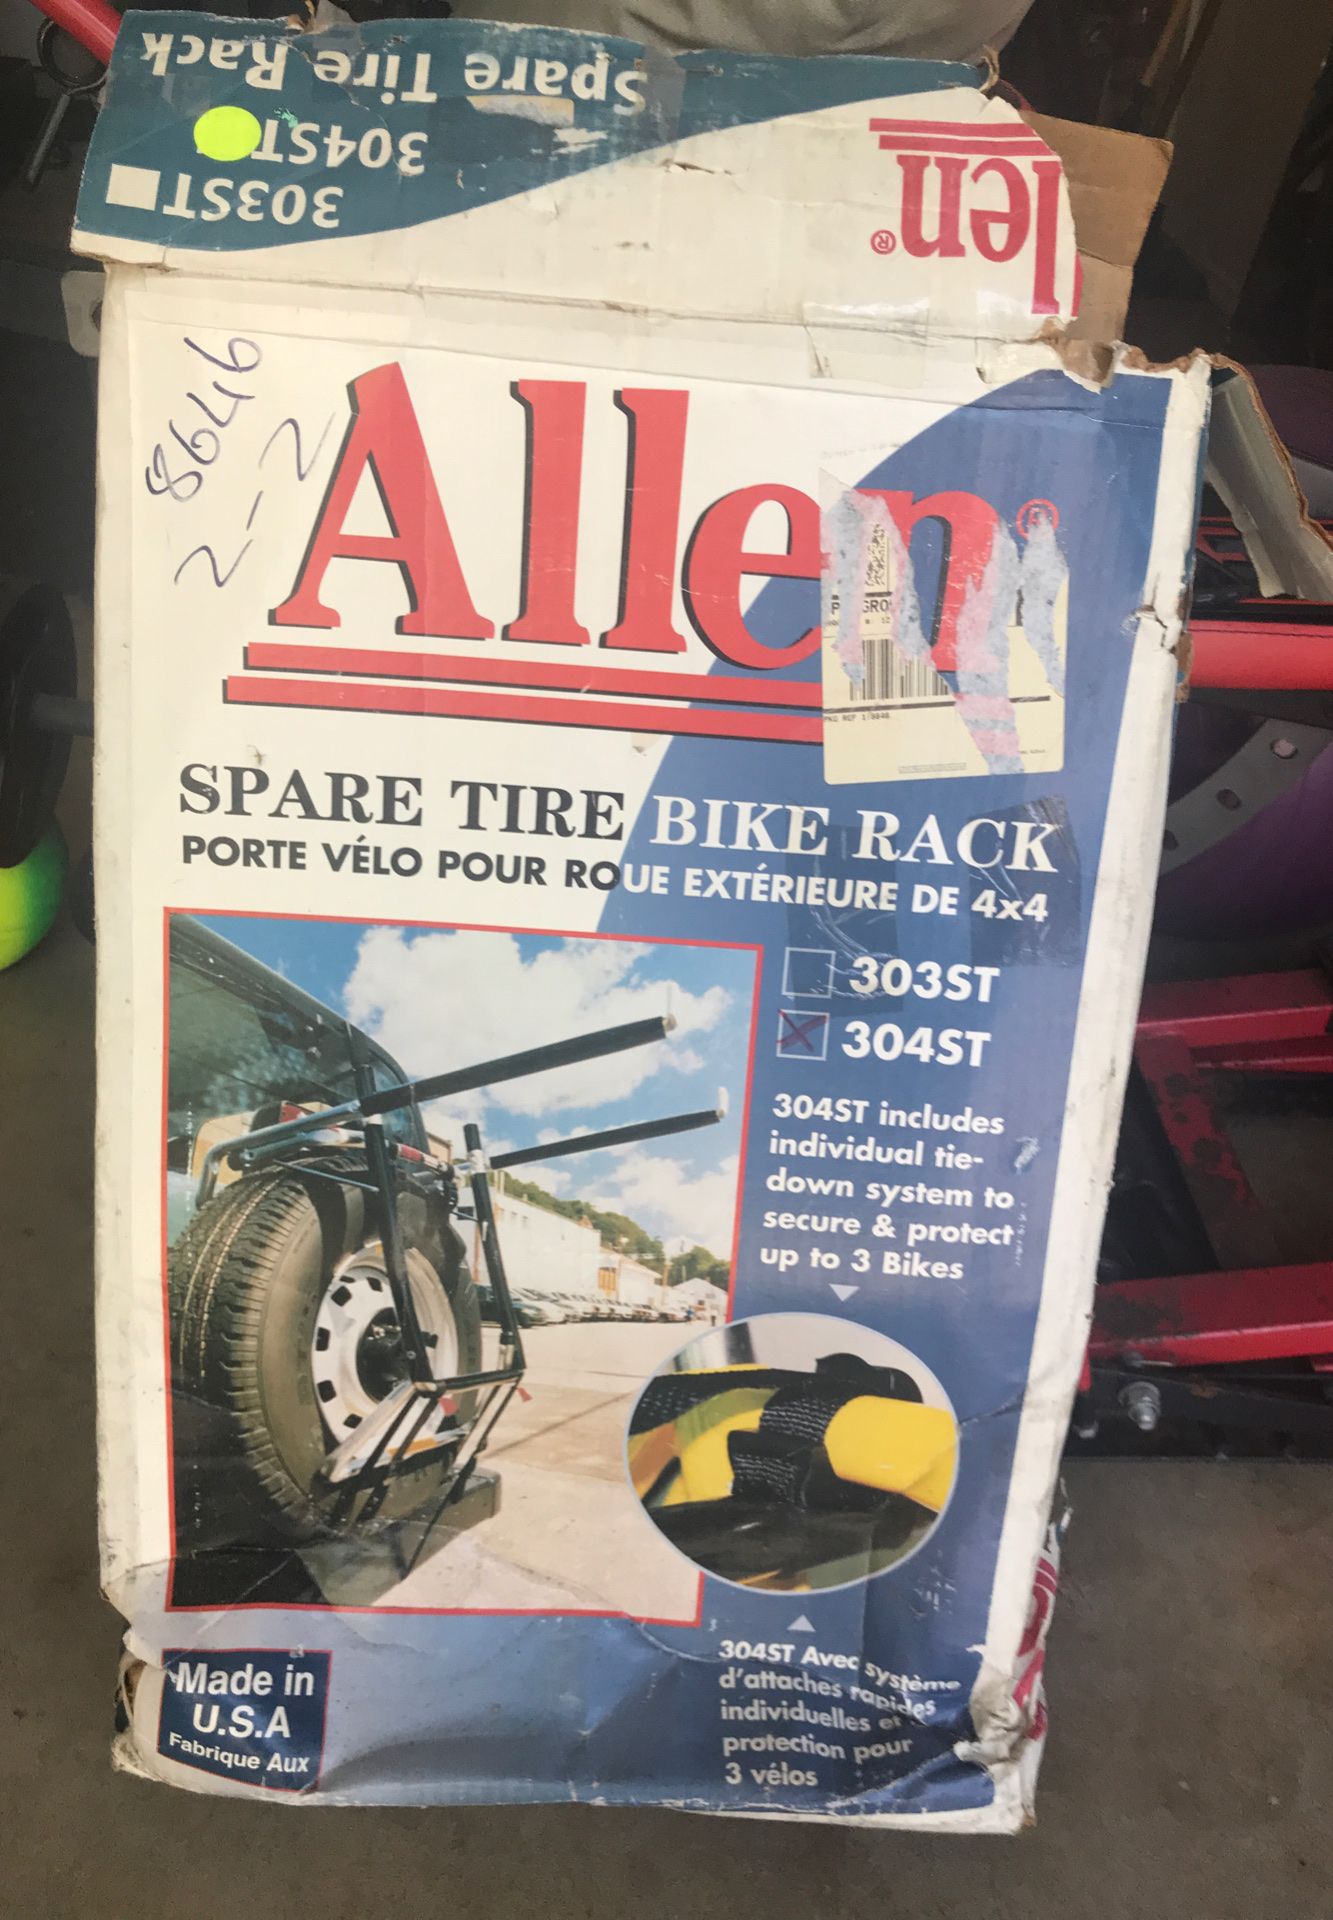 Spare tire bike rack